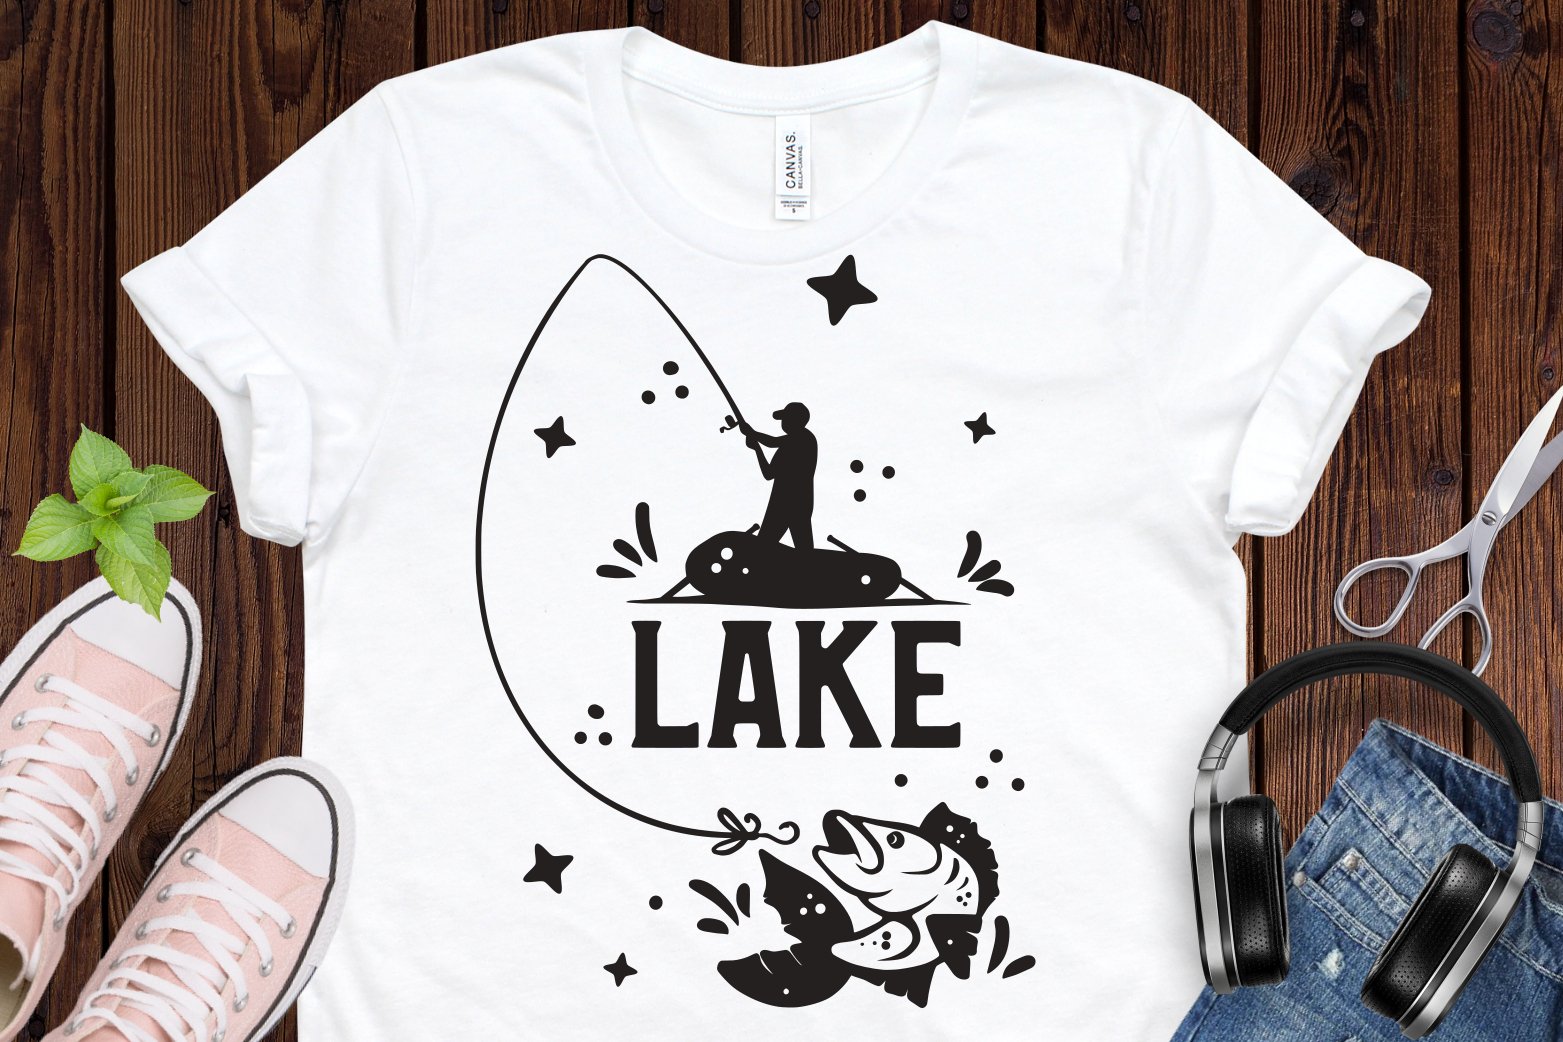 Lake designed t-shirt.